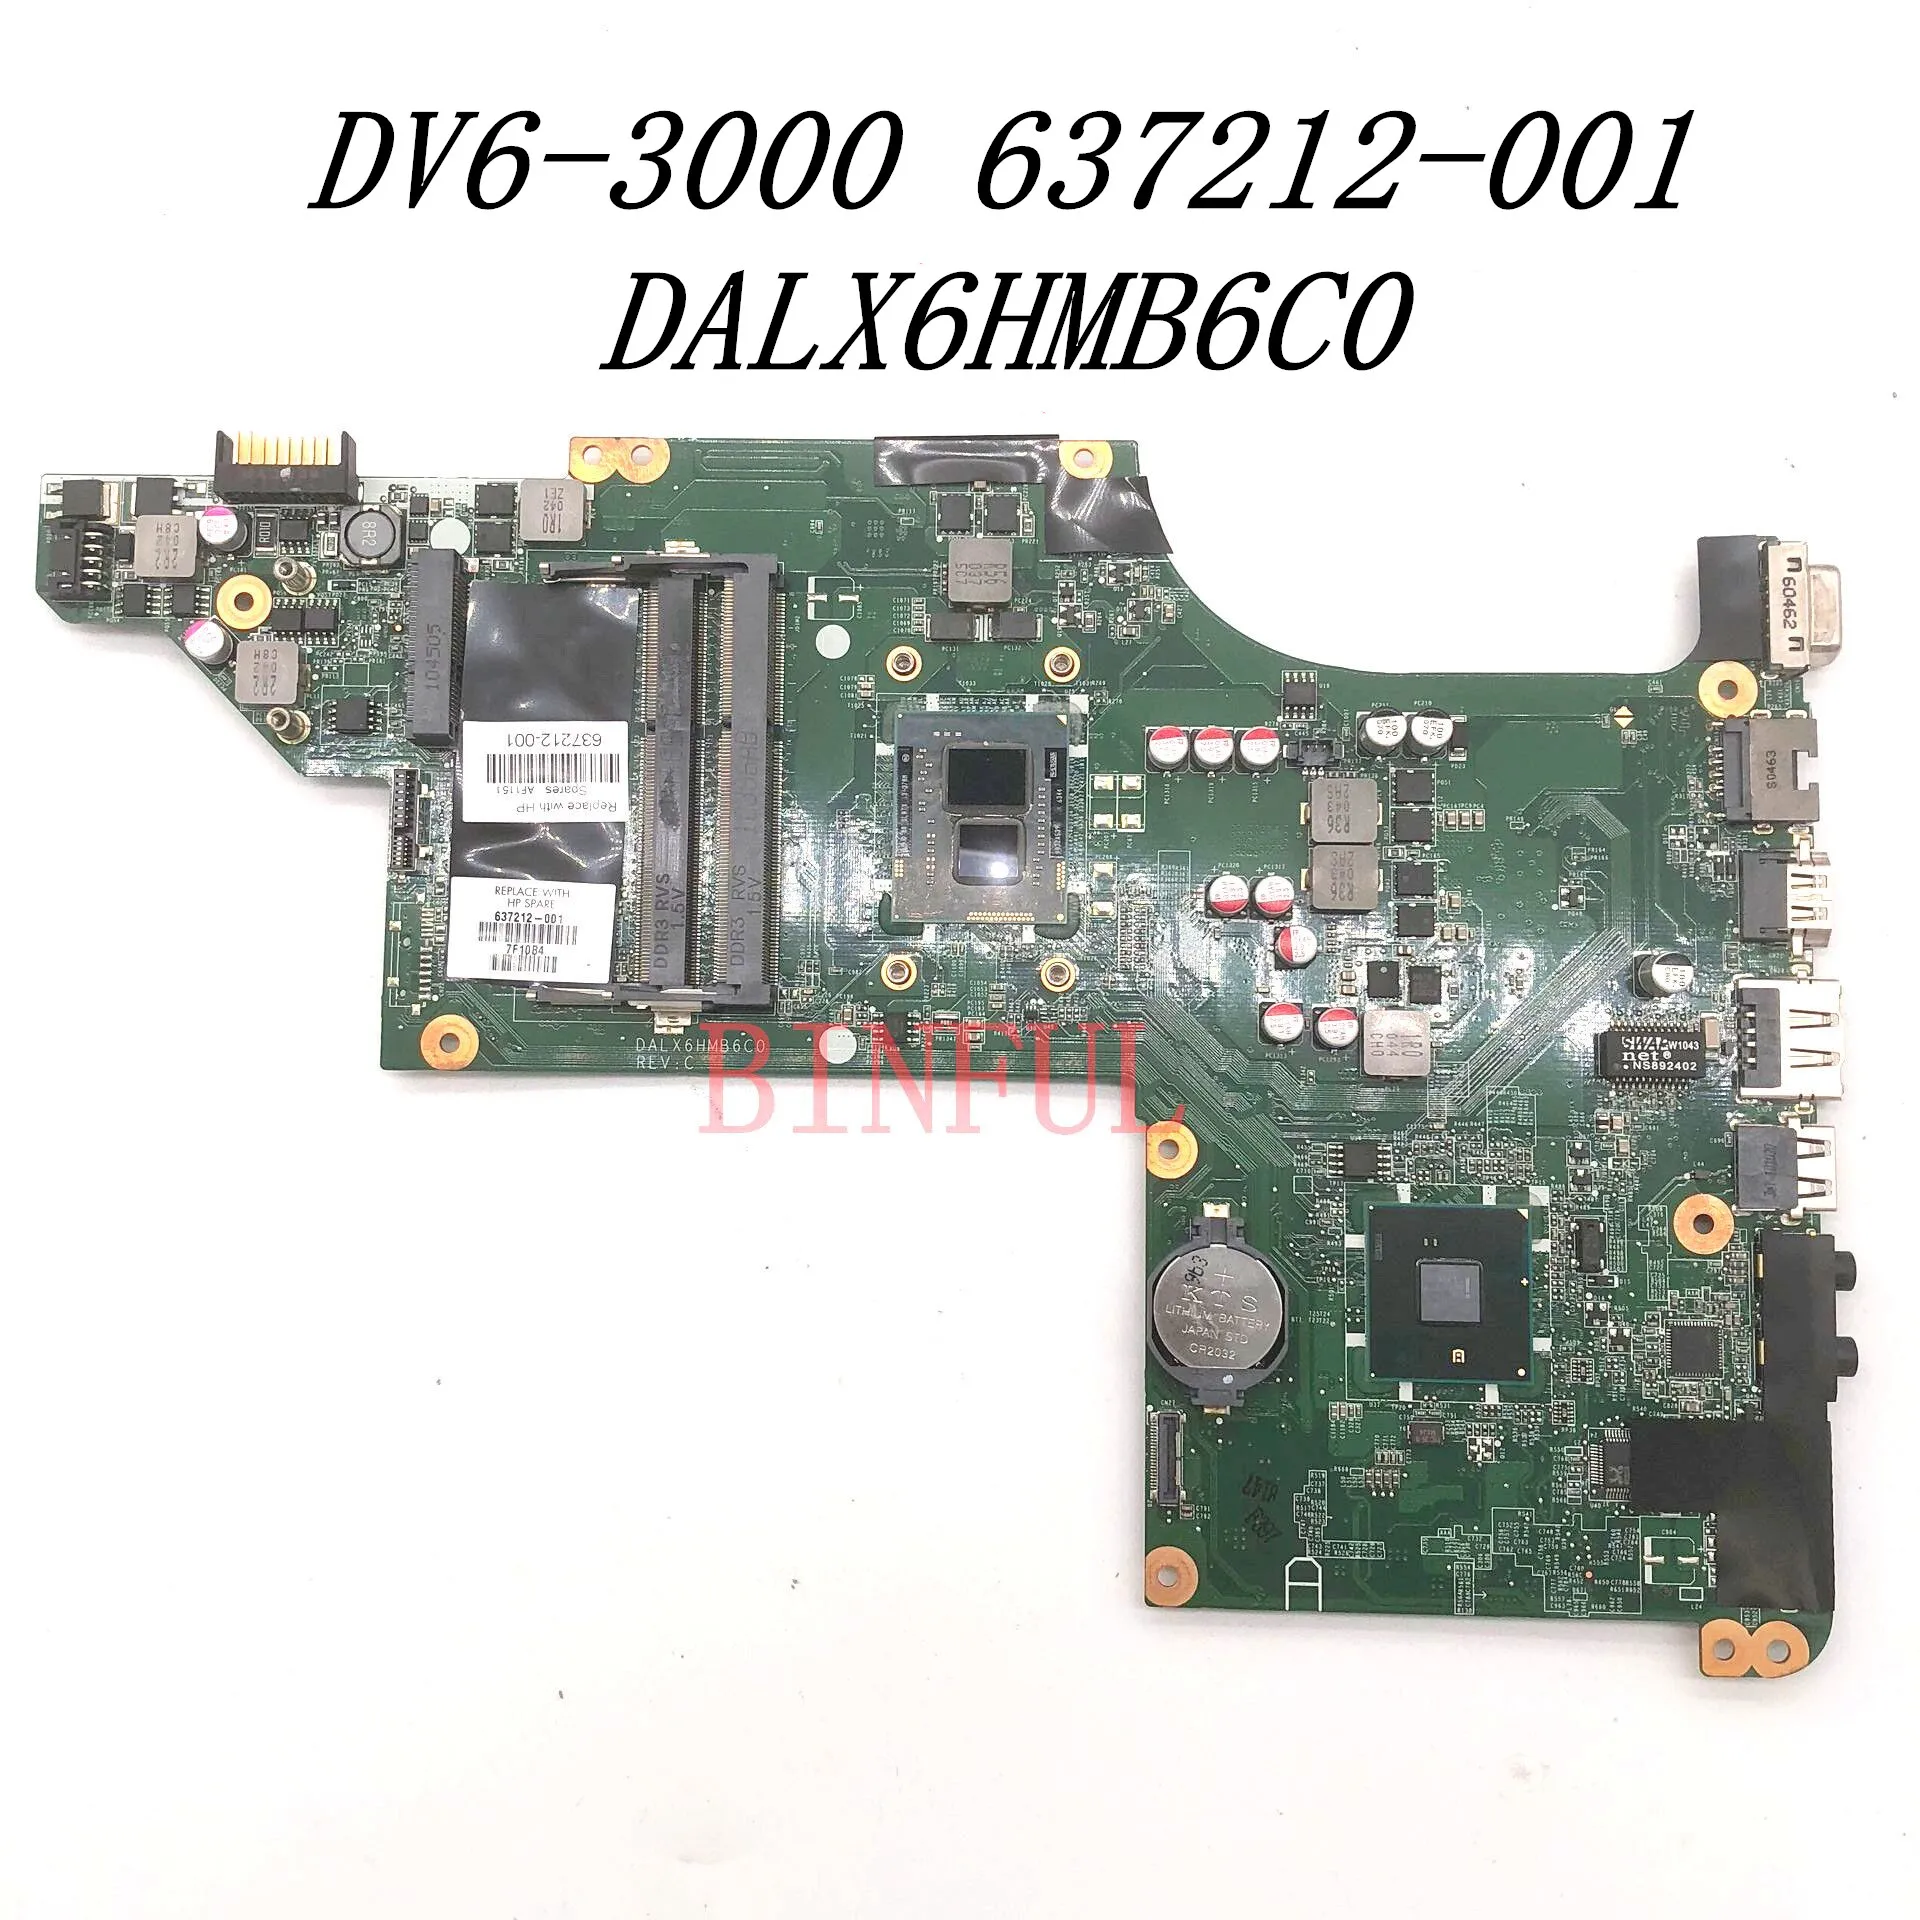 637212-001 637212-501 639365-001 For DV6 DV6-3000 Laptop Motherboard DALX6HMB6C0 With i3-370M CPU HM65 DDR3 100% Full Tested OK